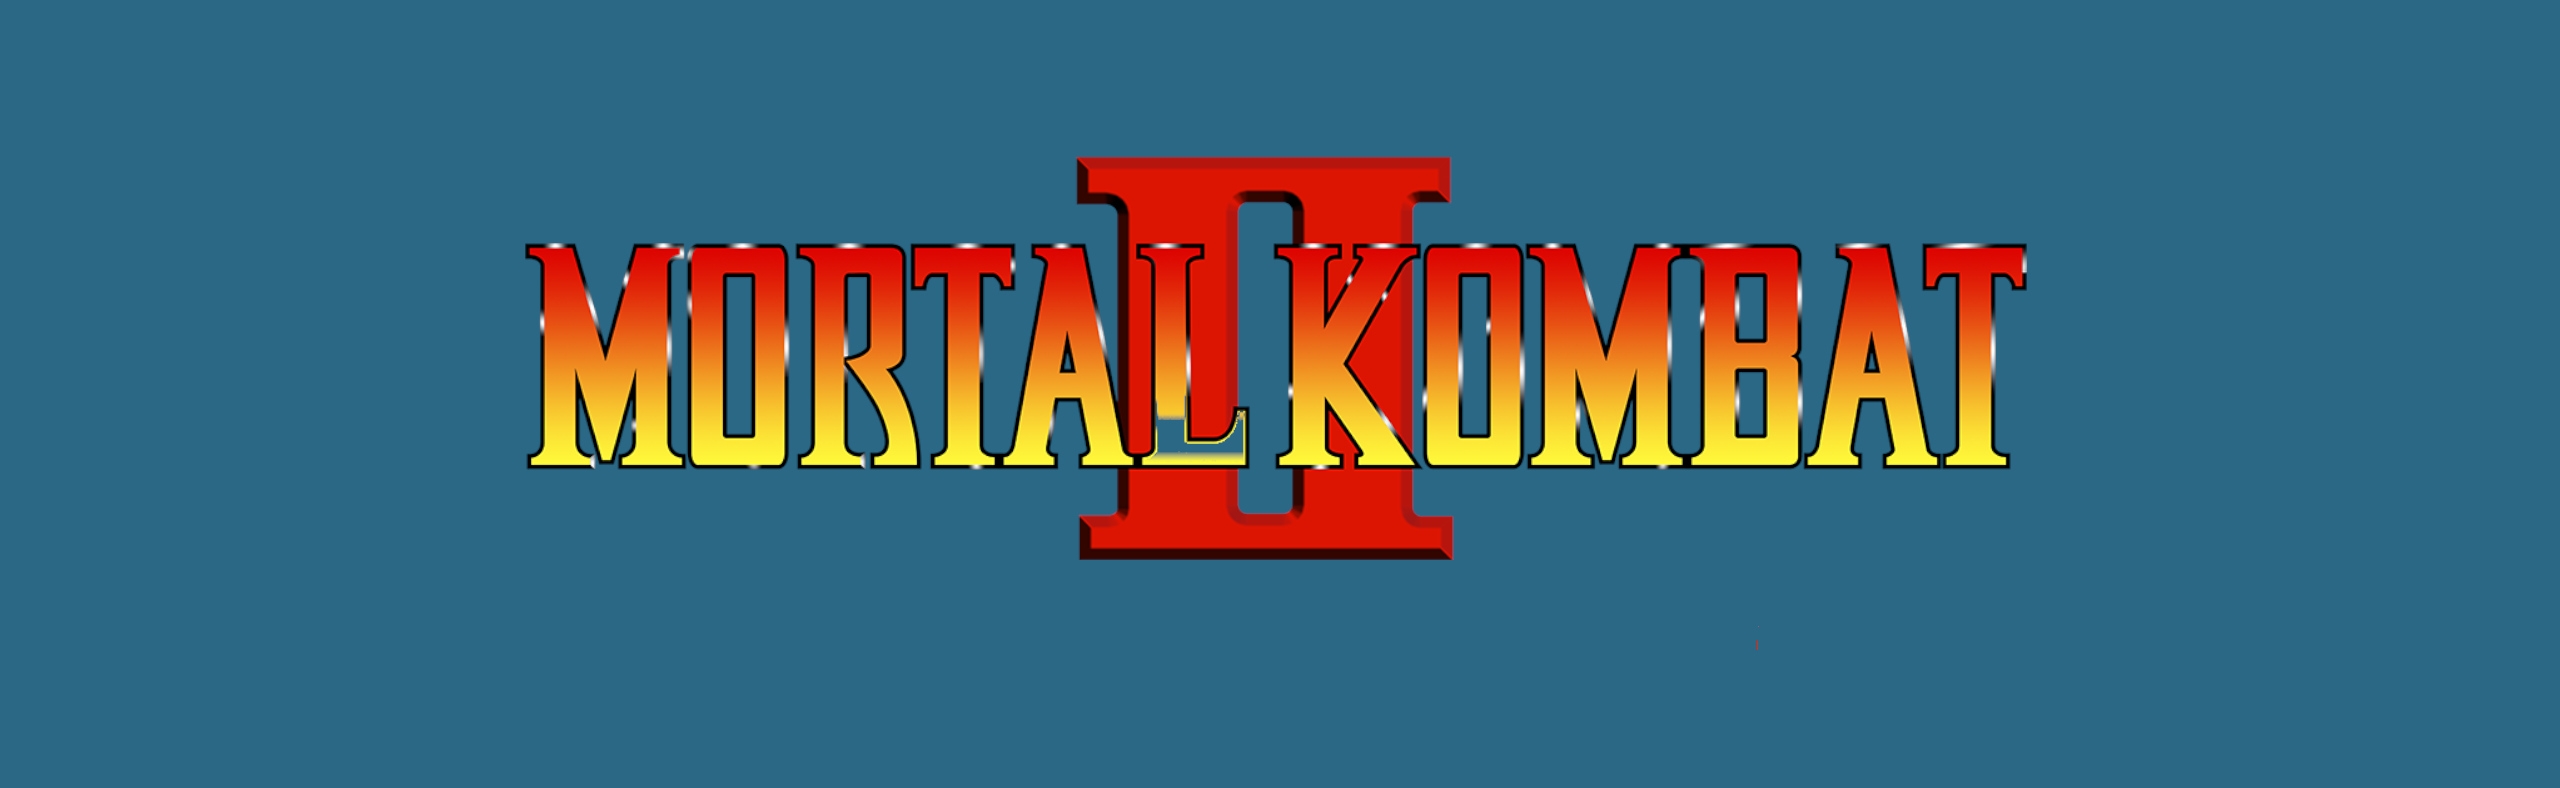 Banner Mortal Kombat ll